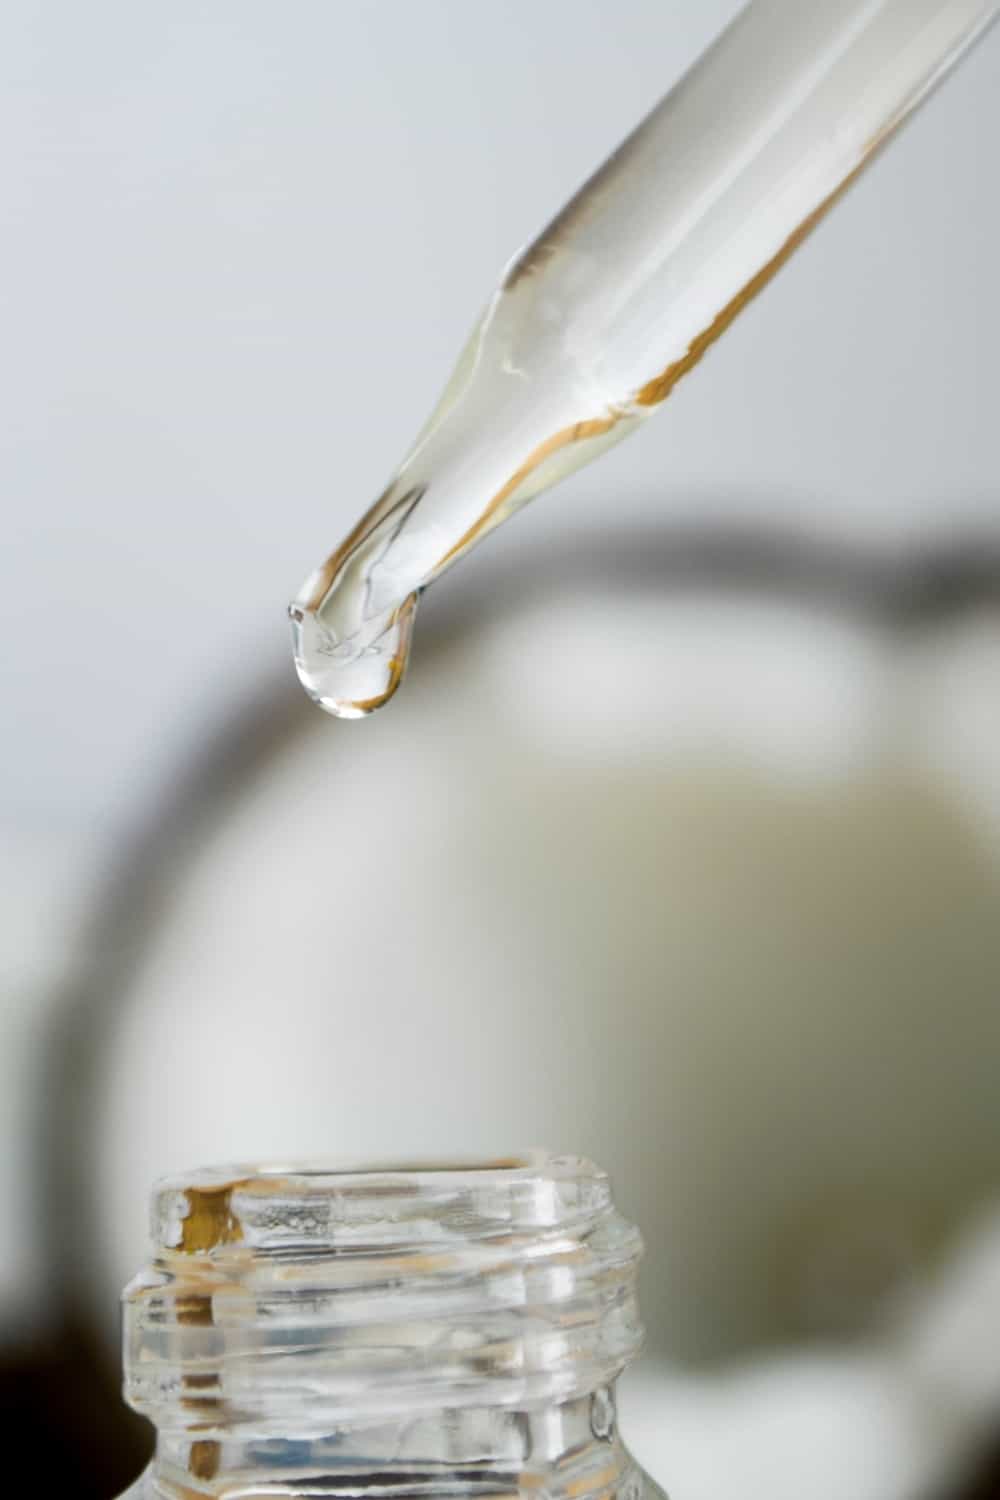 liquid coconut oil prepared for cosmetic purposes